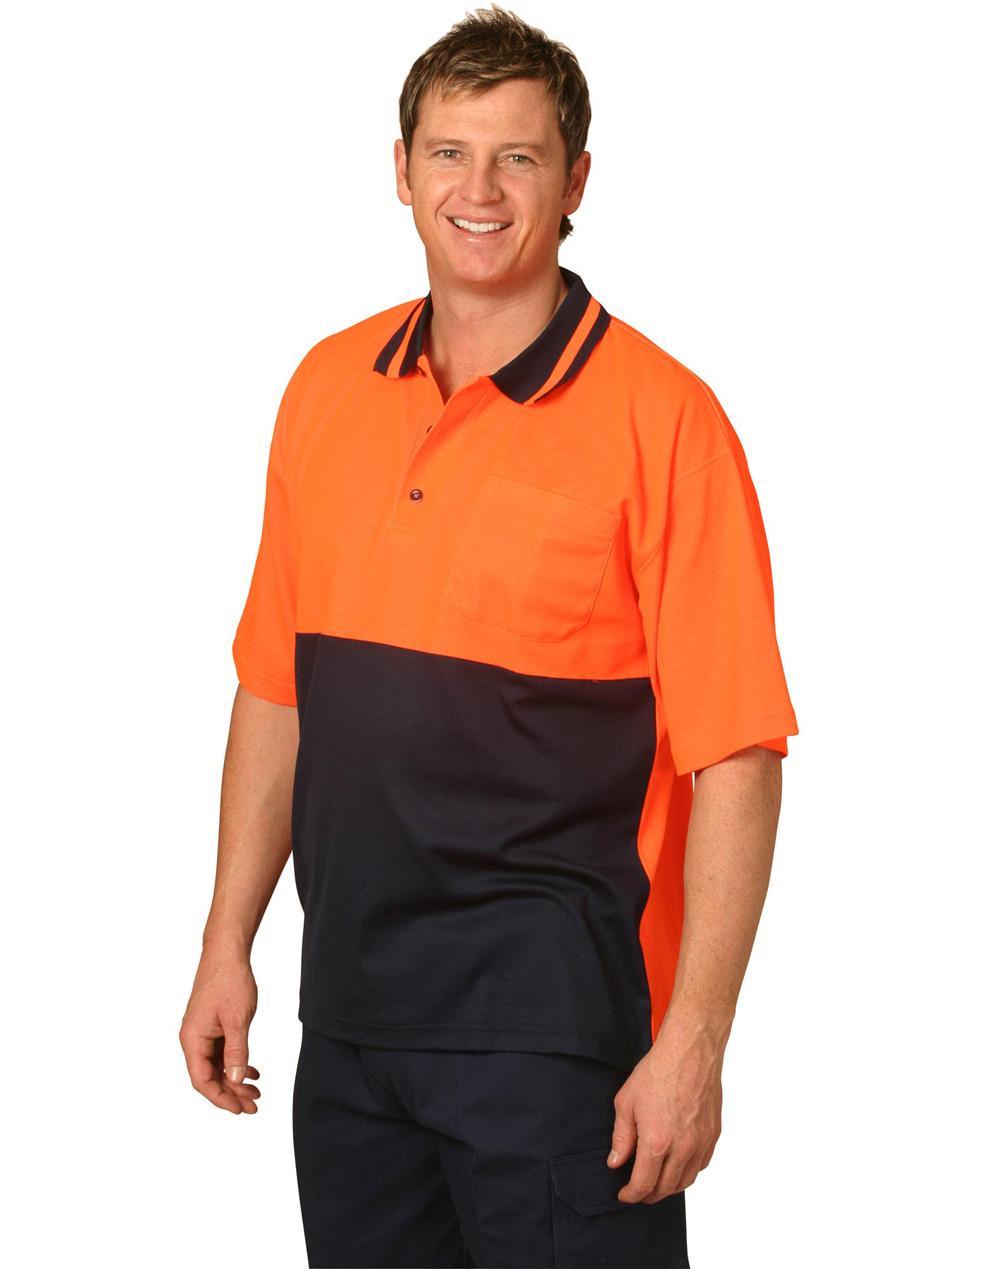 Custom Safety Short Sleeve Polo Shirts Online in Perth Australia